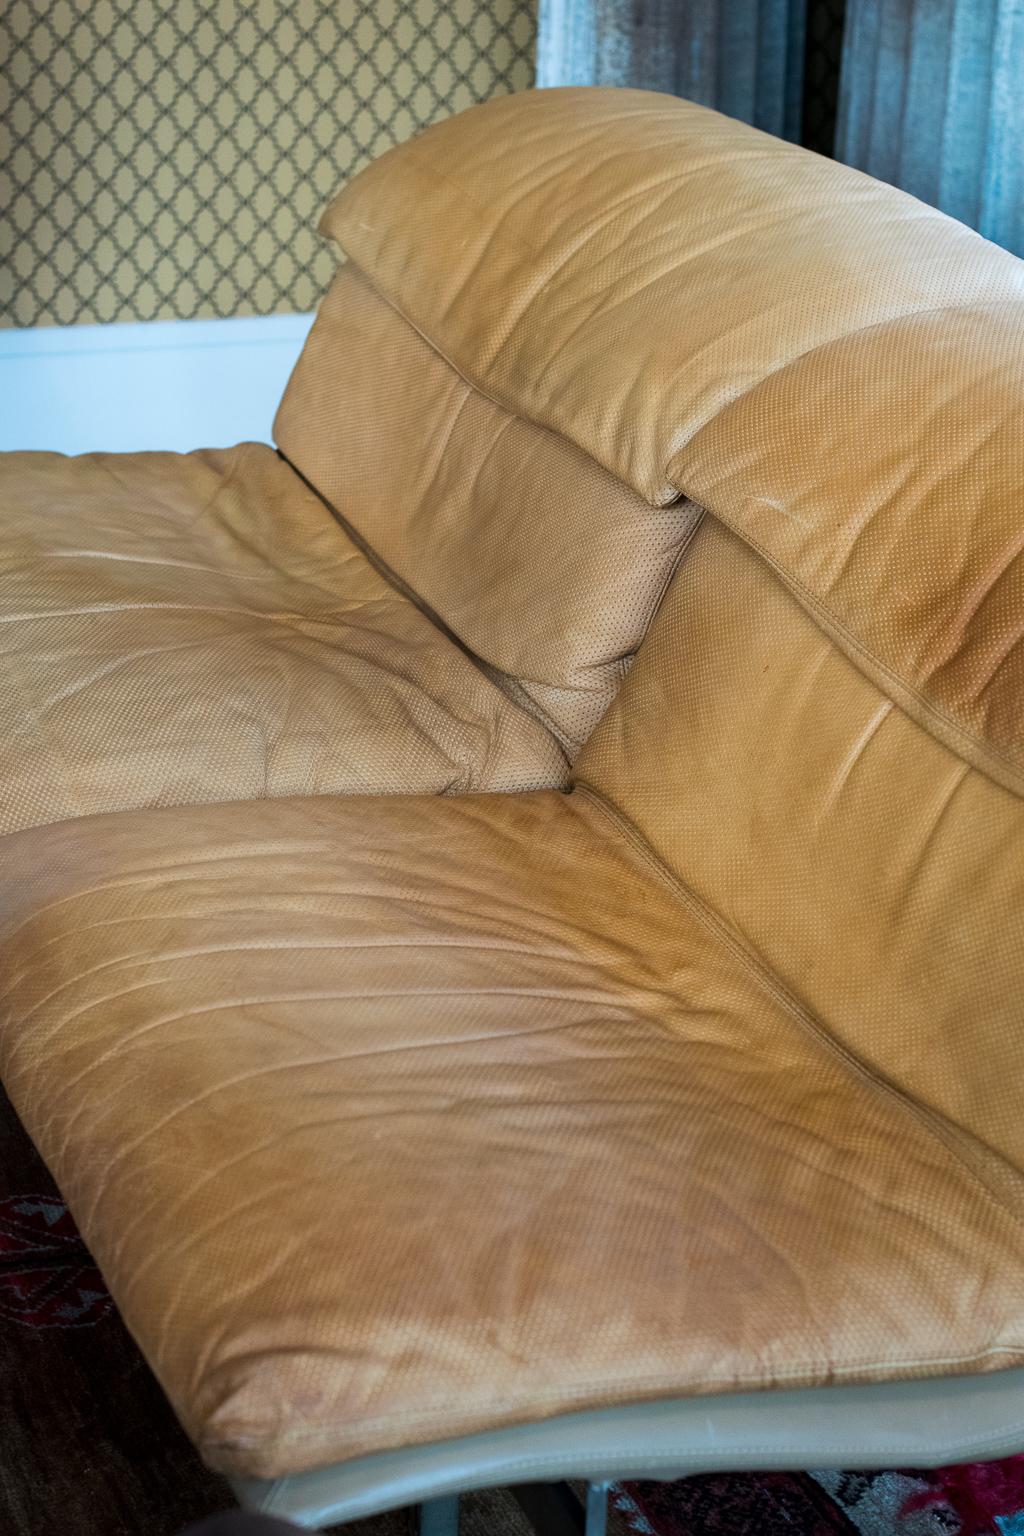 giovanni leather furniture